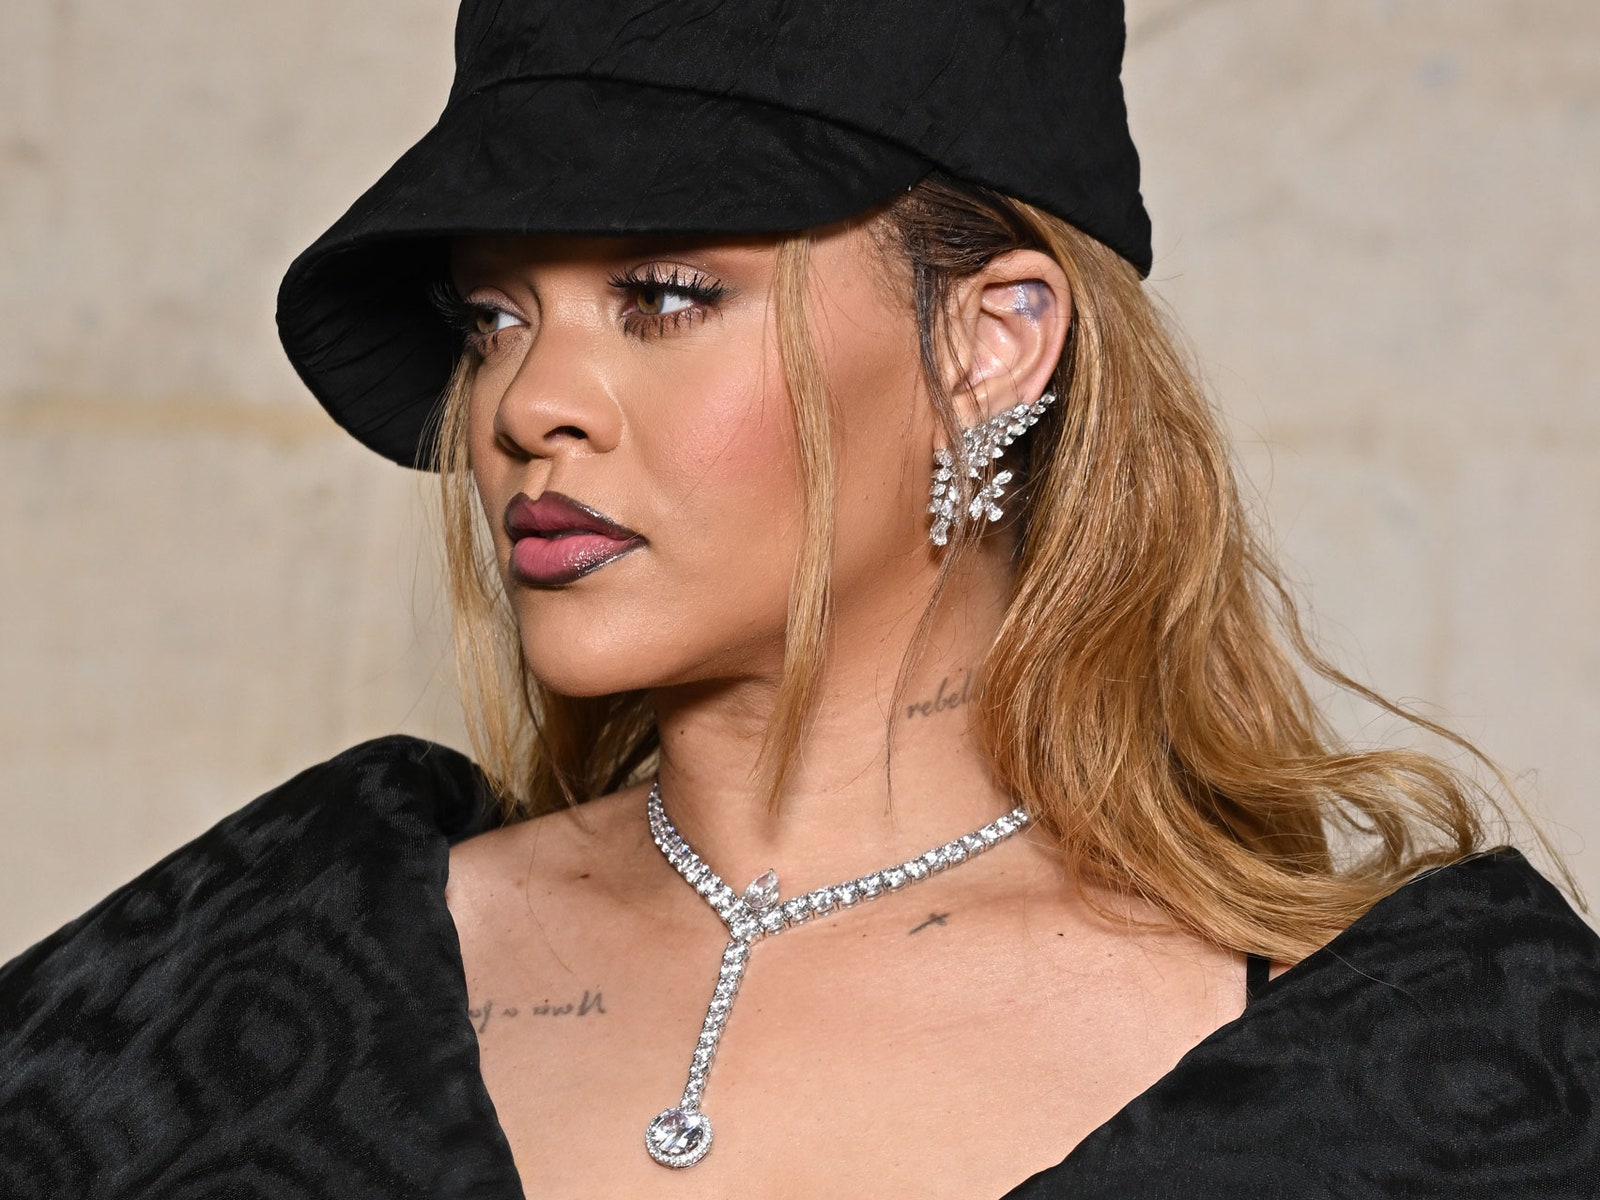 Rihanna's new blonde ‘waterfall’ bangs are giving us flashbacks